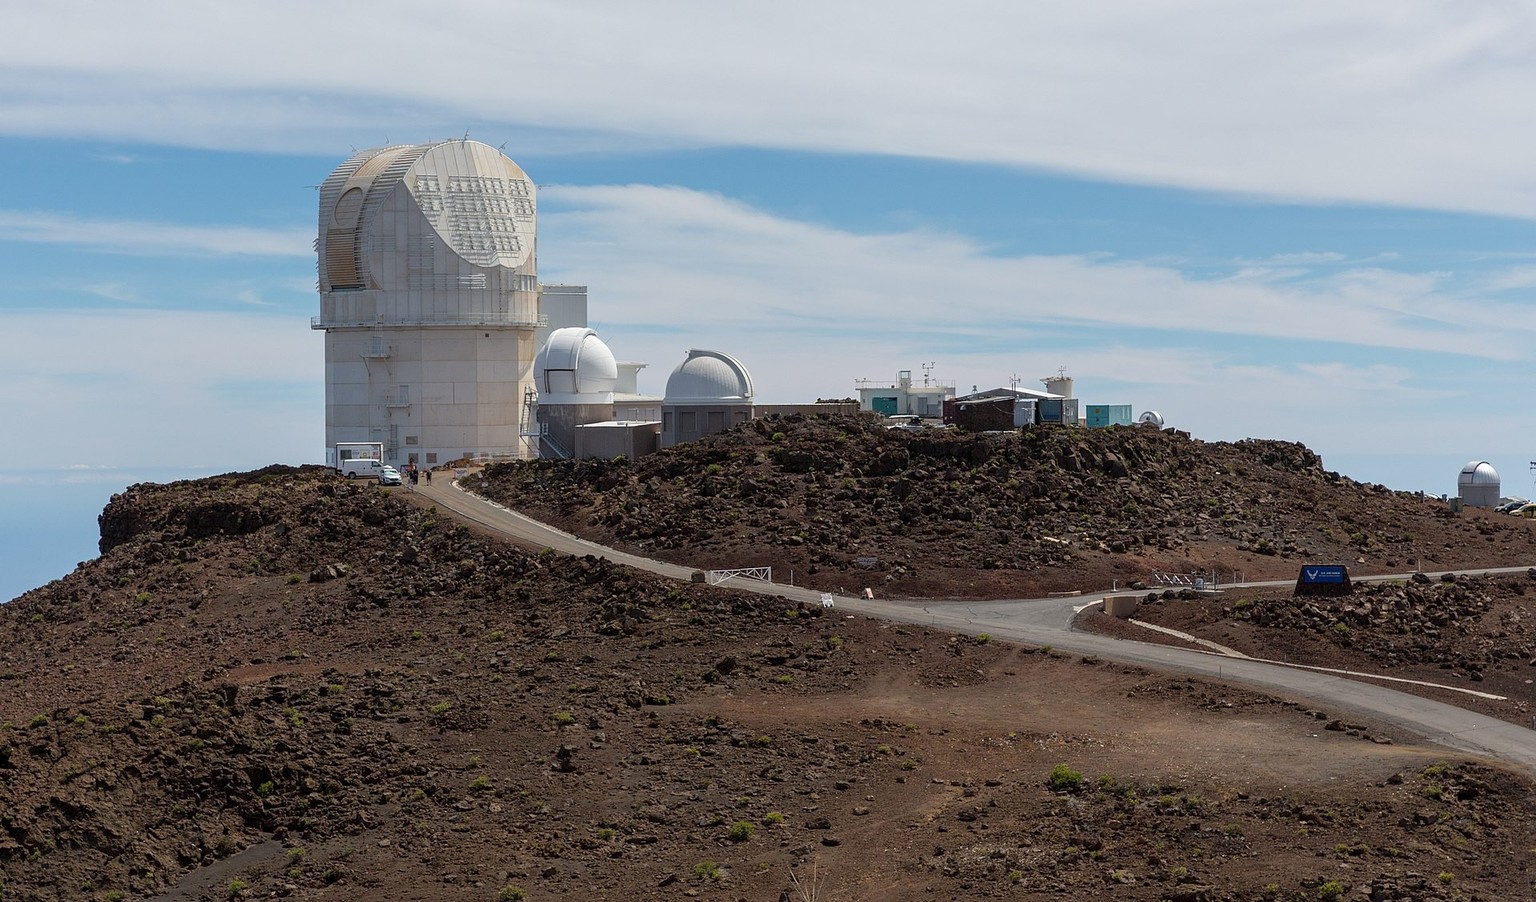 Daniel K. Inouye Solar Telescope (left) on Hawaiian volcano Haleakala, island of Maui.  By Ekrem Canli - Own work, CC BY-SA 4.0, https://commons.wikimedia.org/w/index.php?curid=6164...